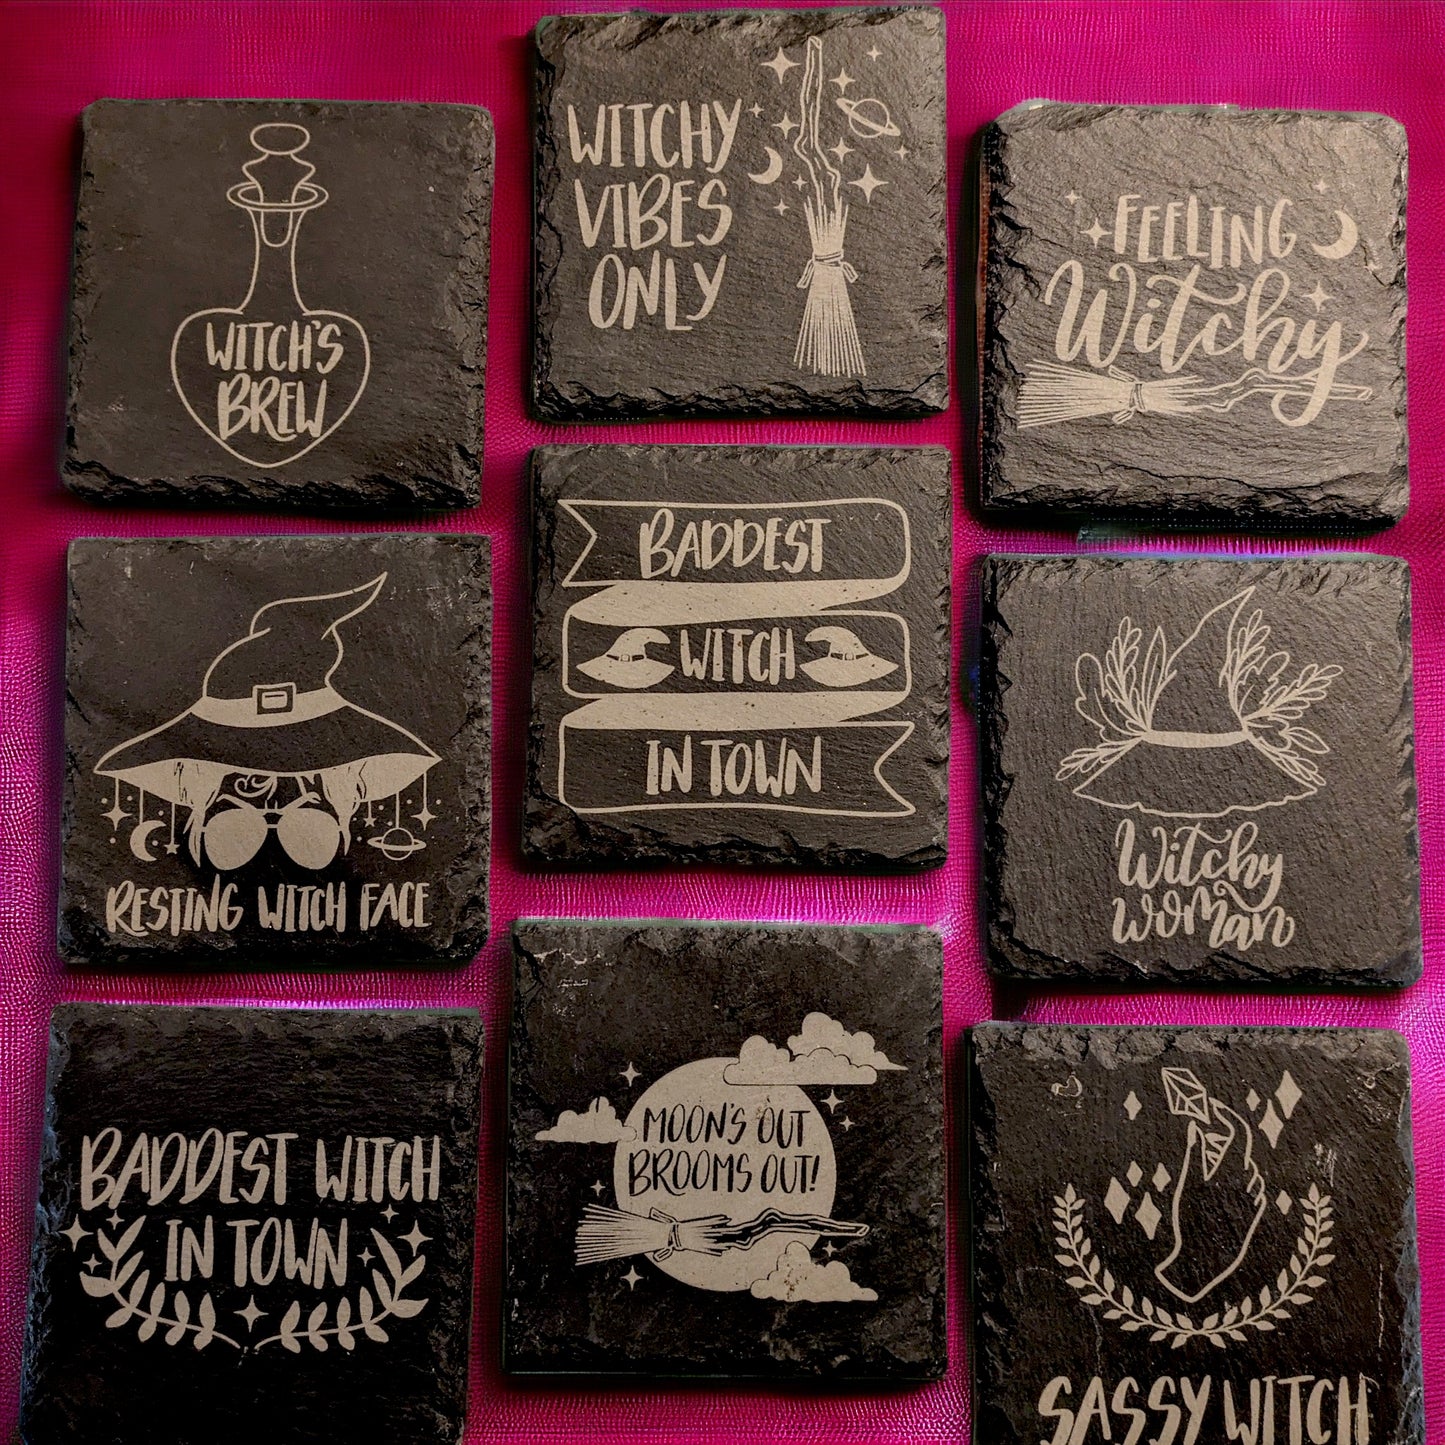 Witchy Slate Coaster by Curunír Crafts